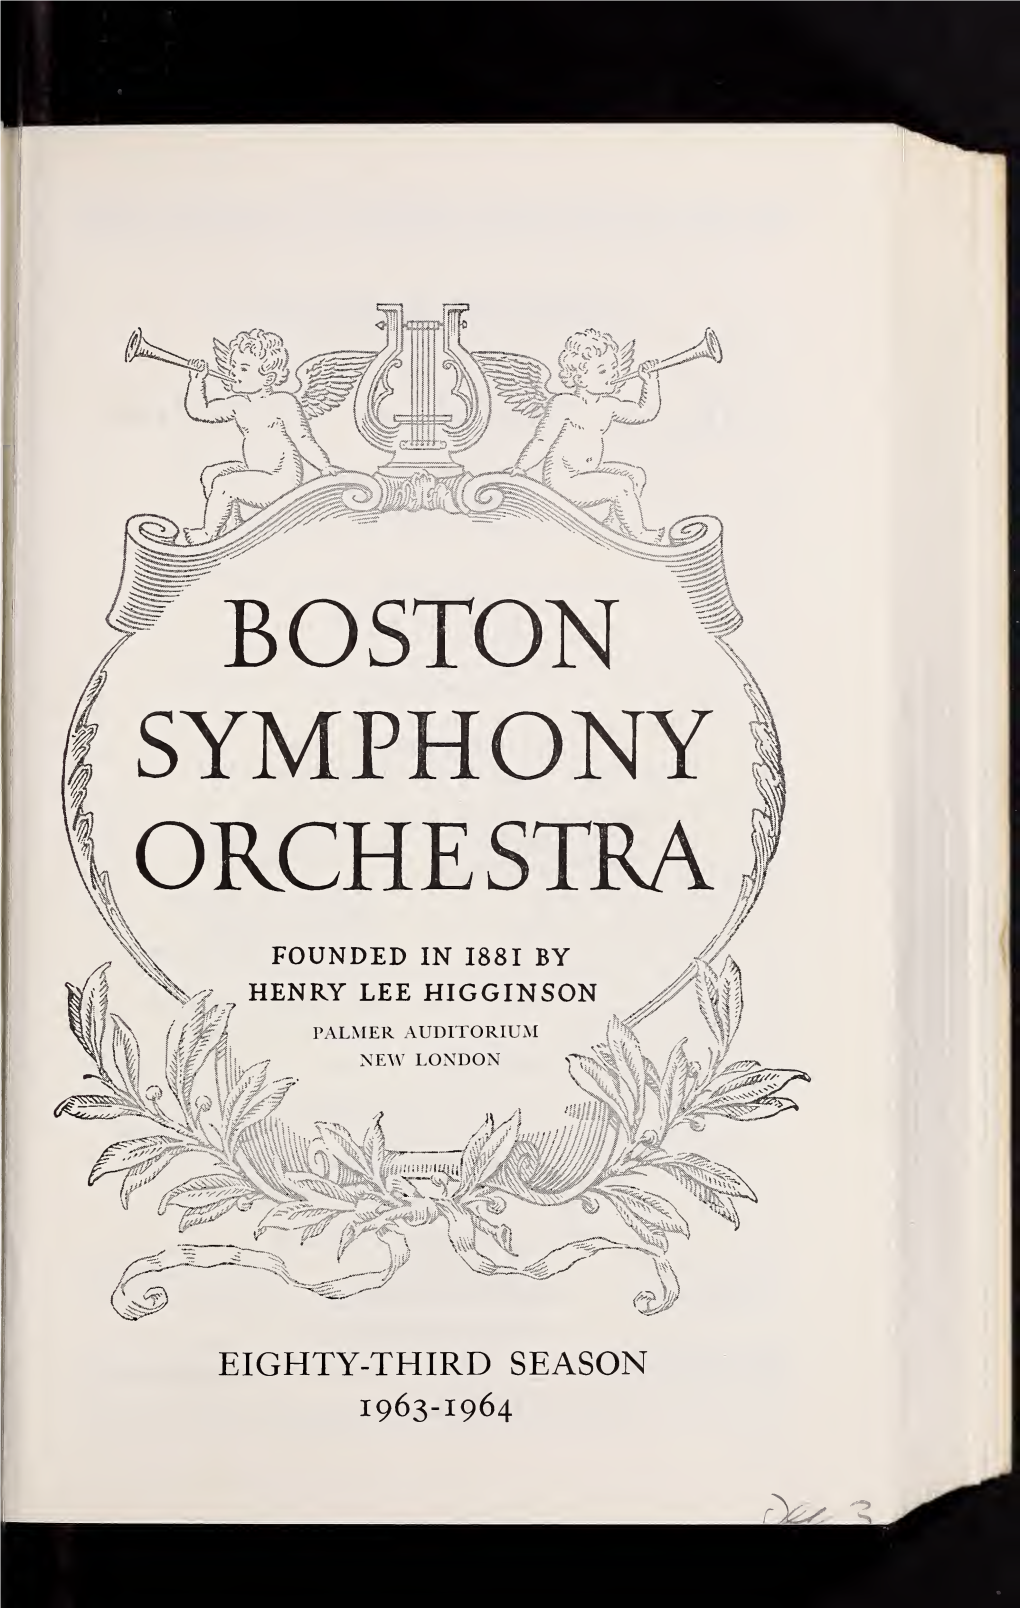 Boston Symphony Orchestra Concert Programs, Season 83,1963